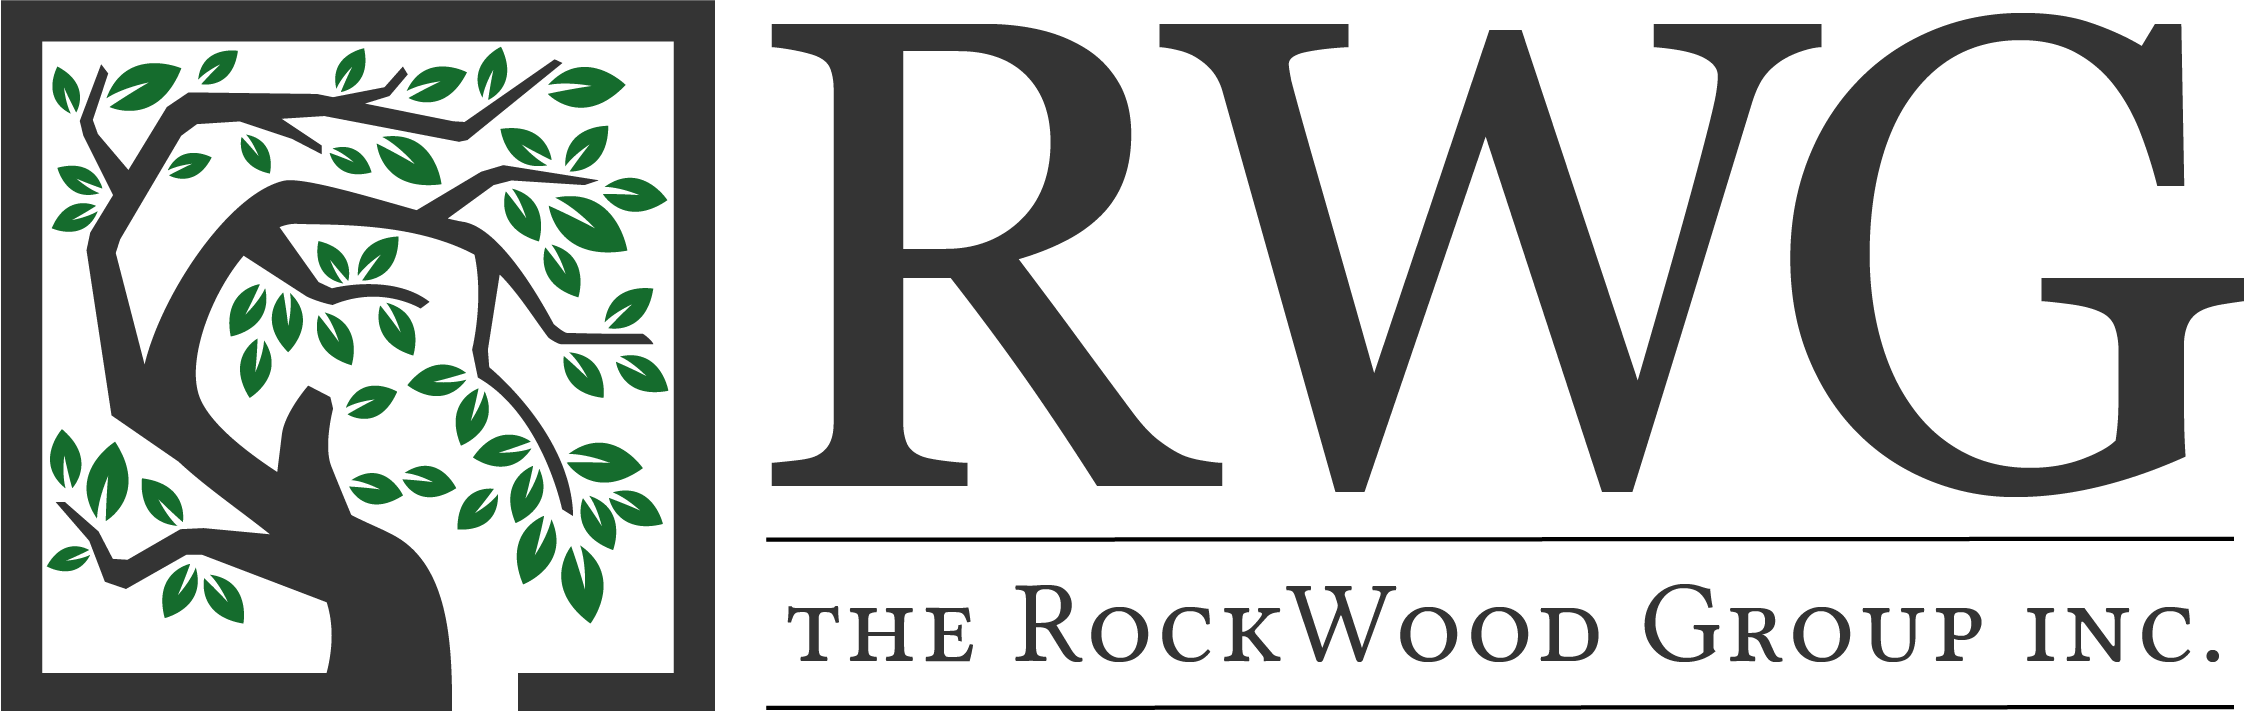 The RockWood Group, Inc. 